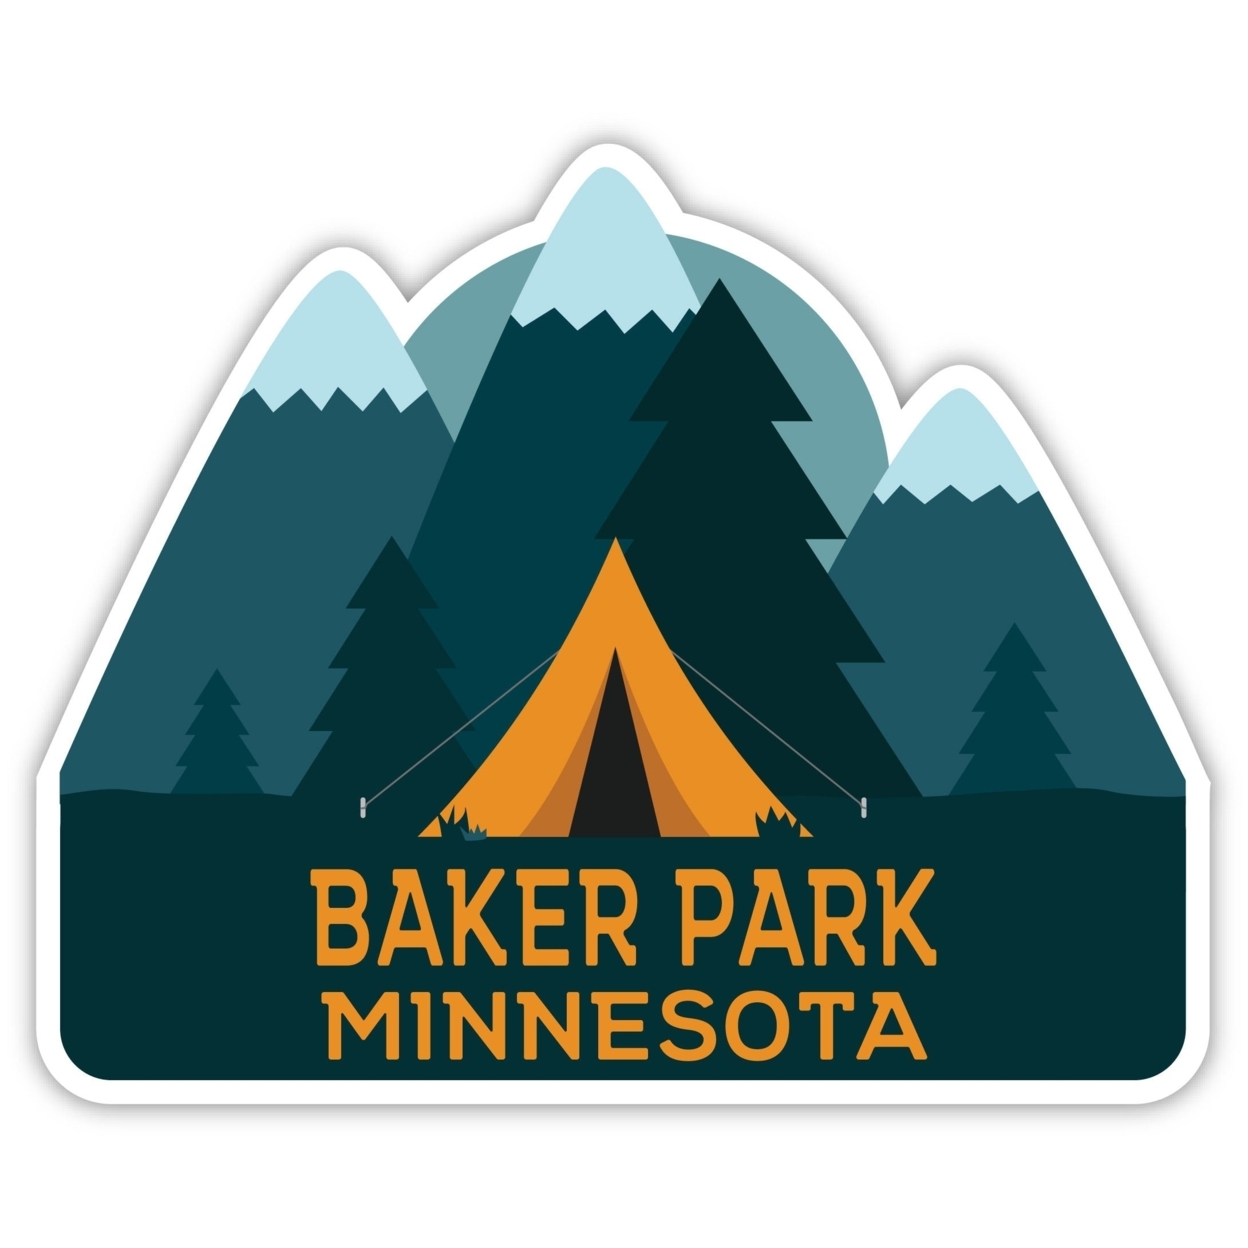 Baker Park Minnesota Souvenir Decorative Stickers (Choose Theme And Size) - 4-Pack, 10-Inch, Tent